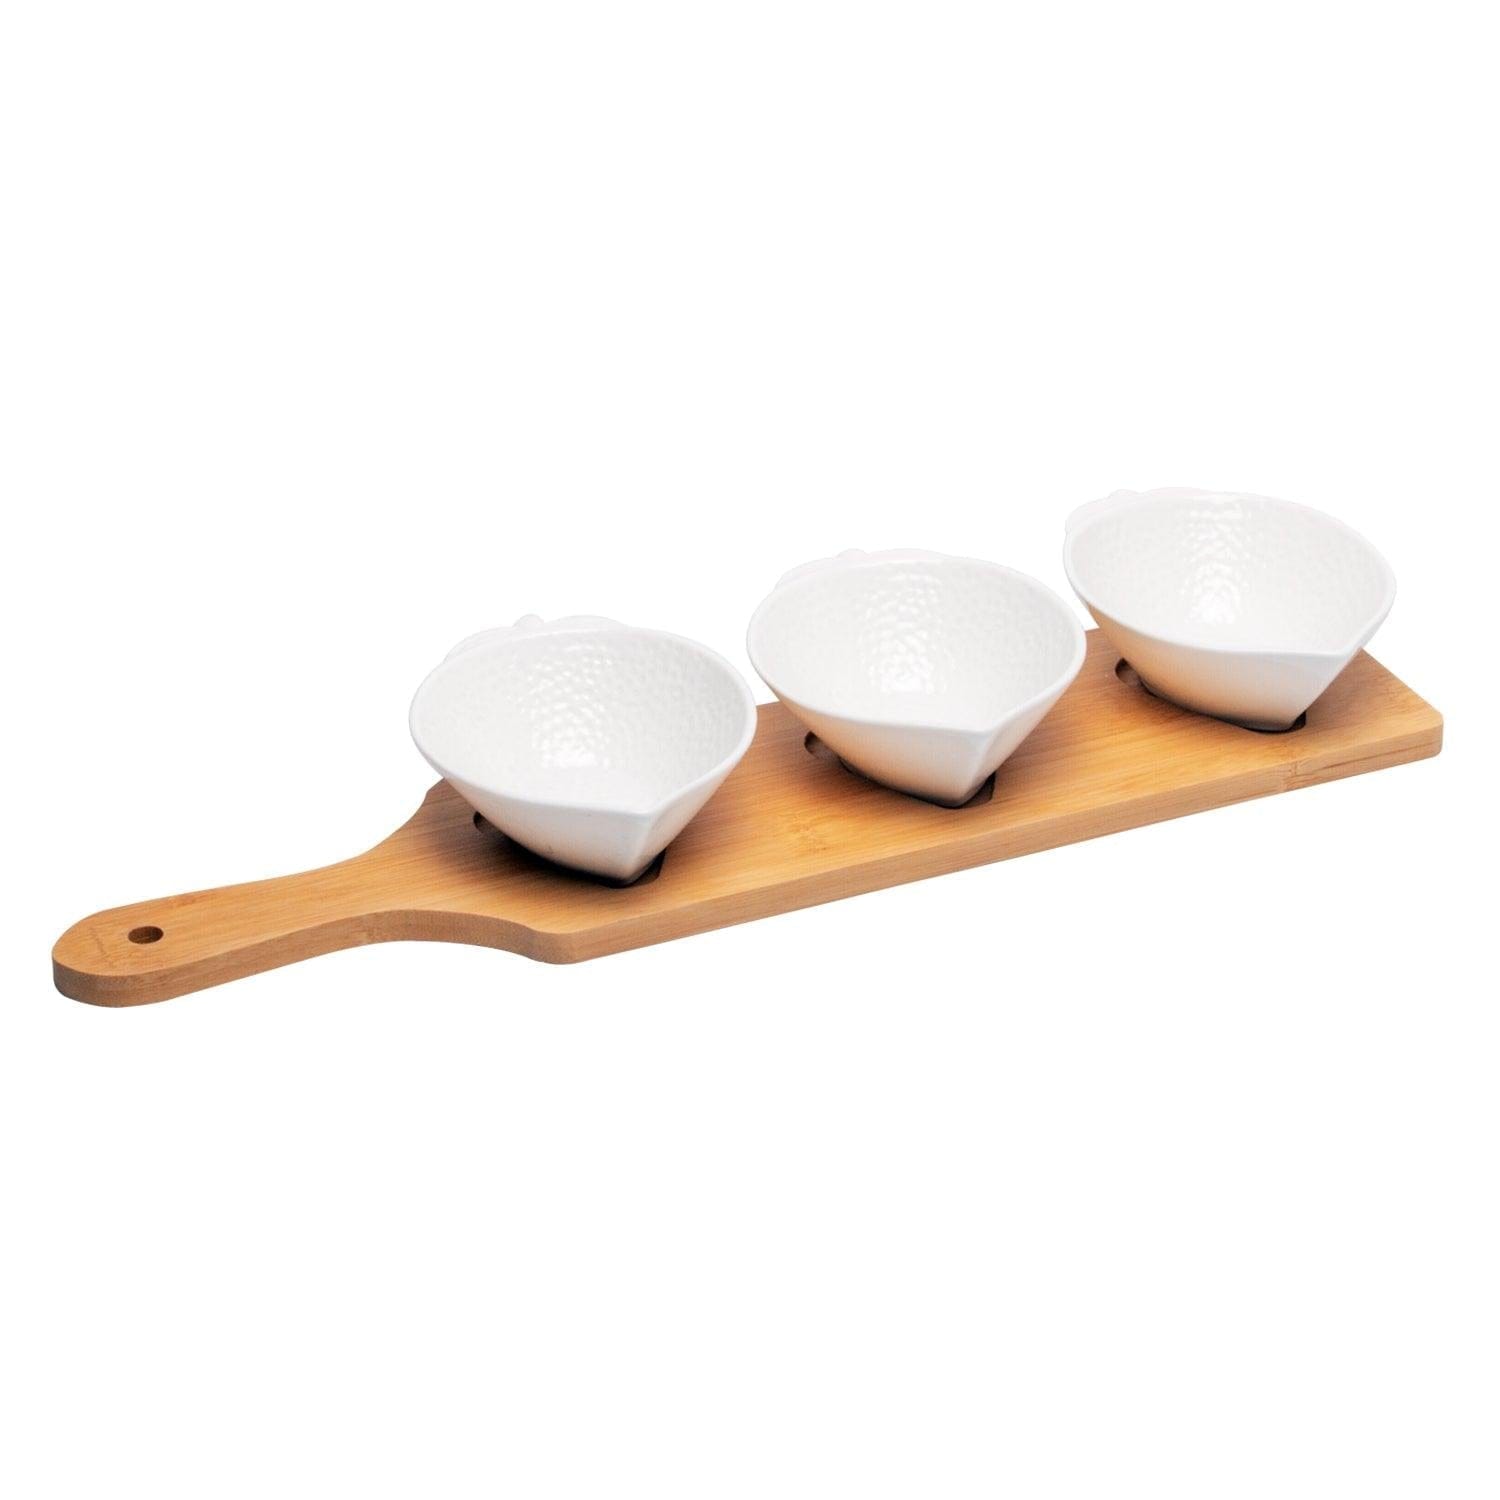 3 Lemon Shaped Ceramic Bowls Serving Platter with Wooden Tray Set